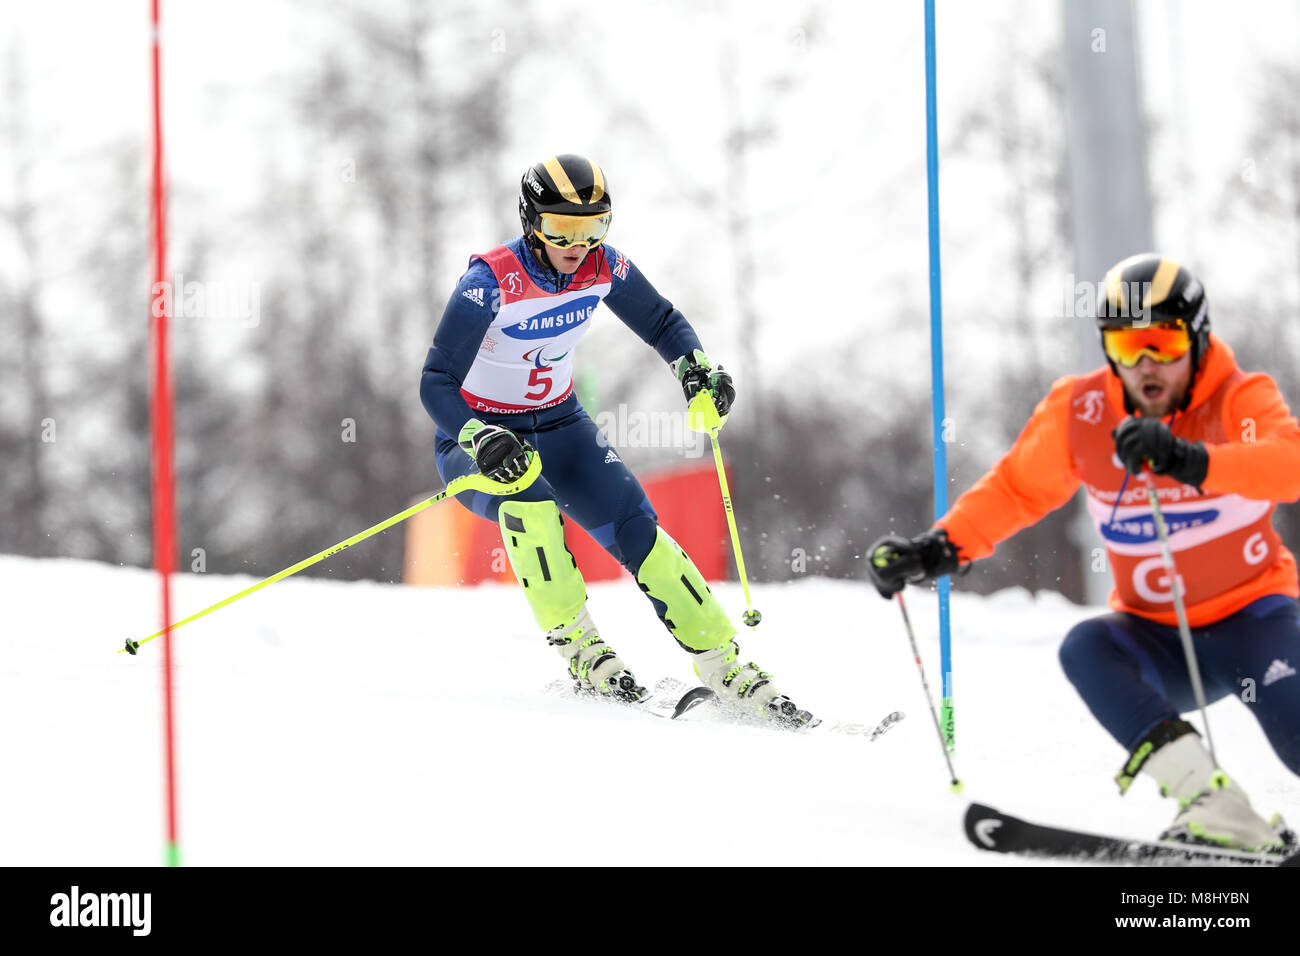 PyeongChang 18 mars . Slalom femmes. Team FR - KNIGHT Millie, Guide : WILD Brett Crédit : Marco Ciccolella/Alamy Live News Banque D'Images